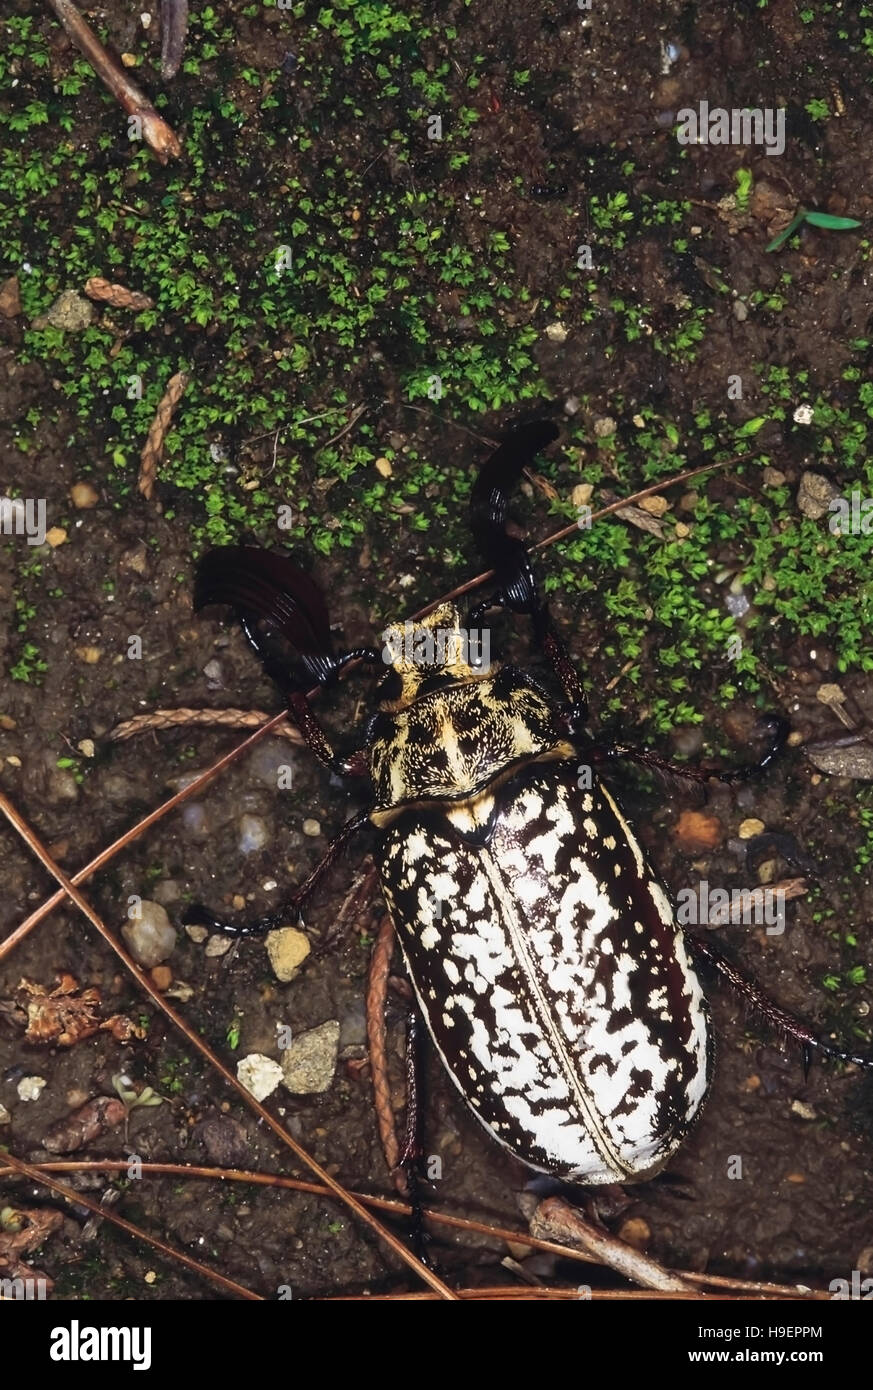 Beetle with lamellate antennae. Arunachal Pradesh, India. Stock Photo